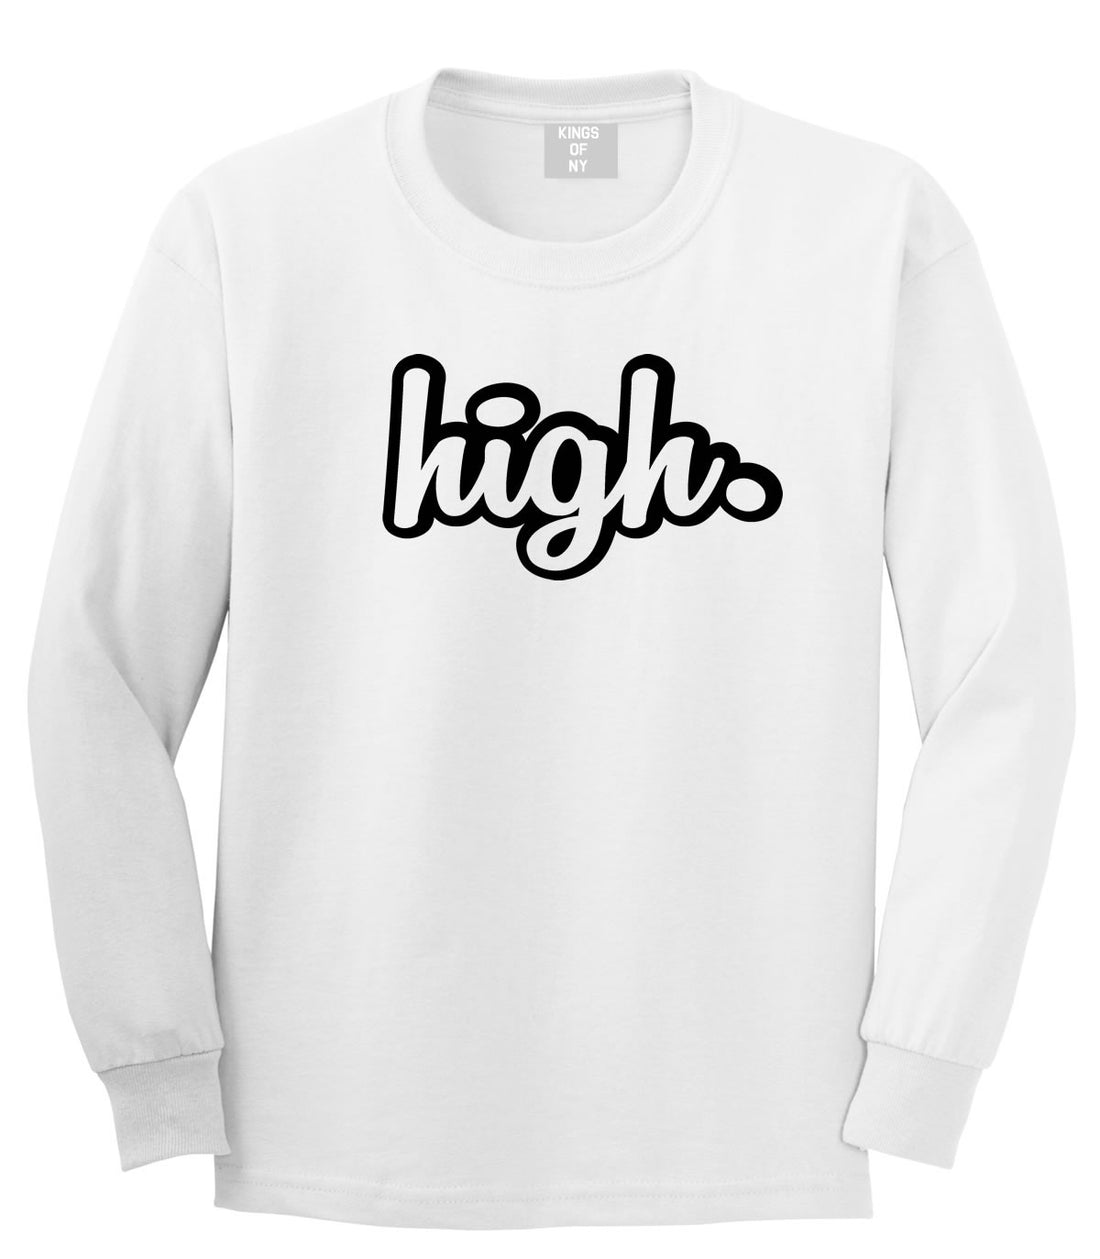 High Weed Faded Dap Smoke Marijuana Long Sleeve Boys Kids T-Shirt in White by Kings Of NY